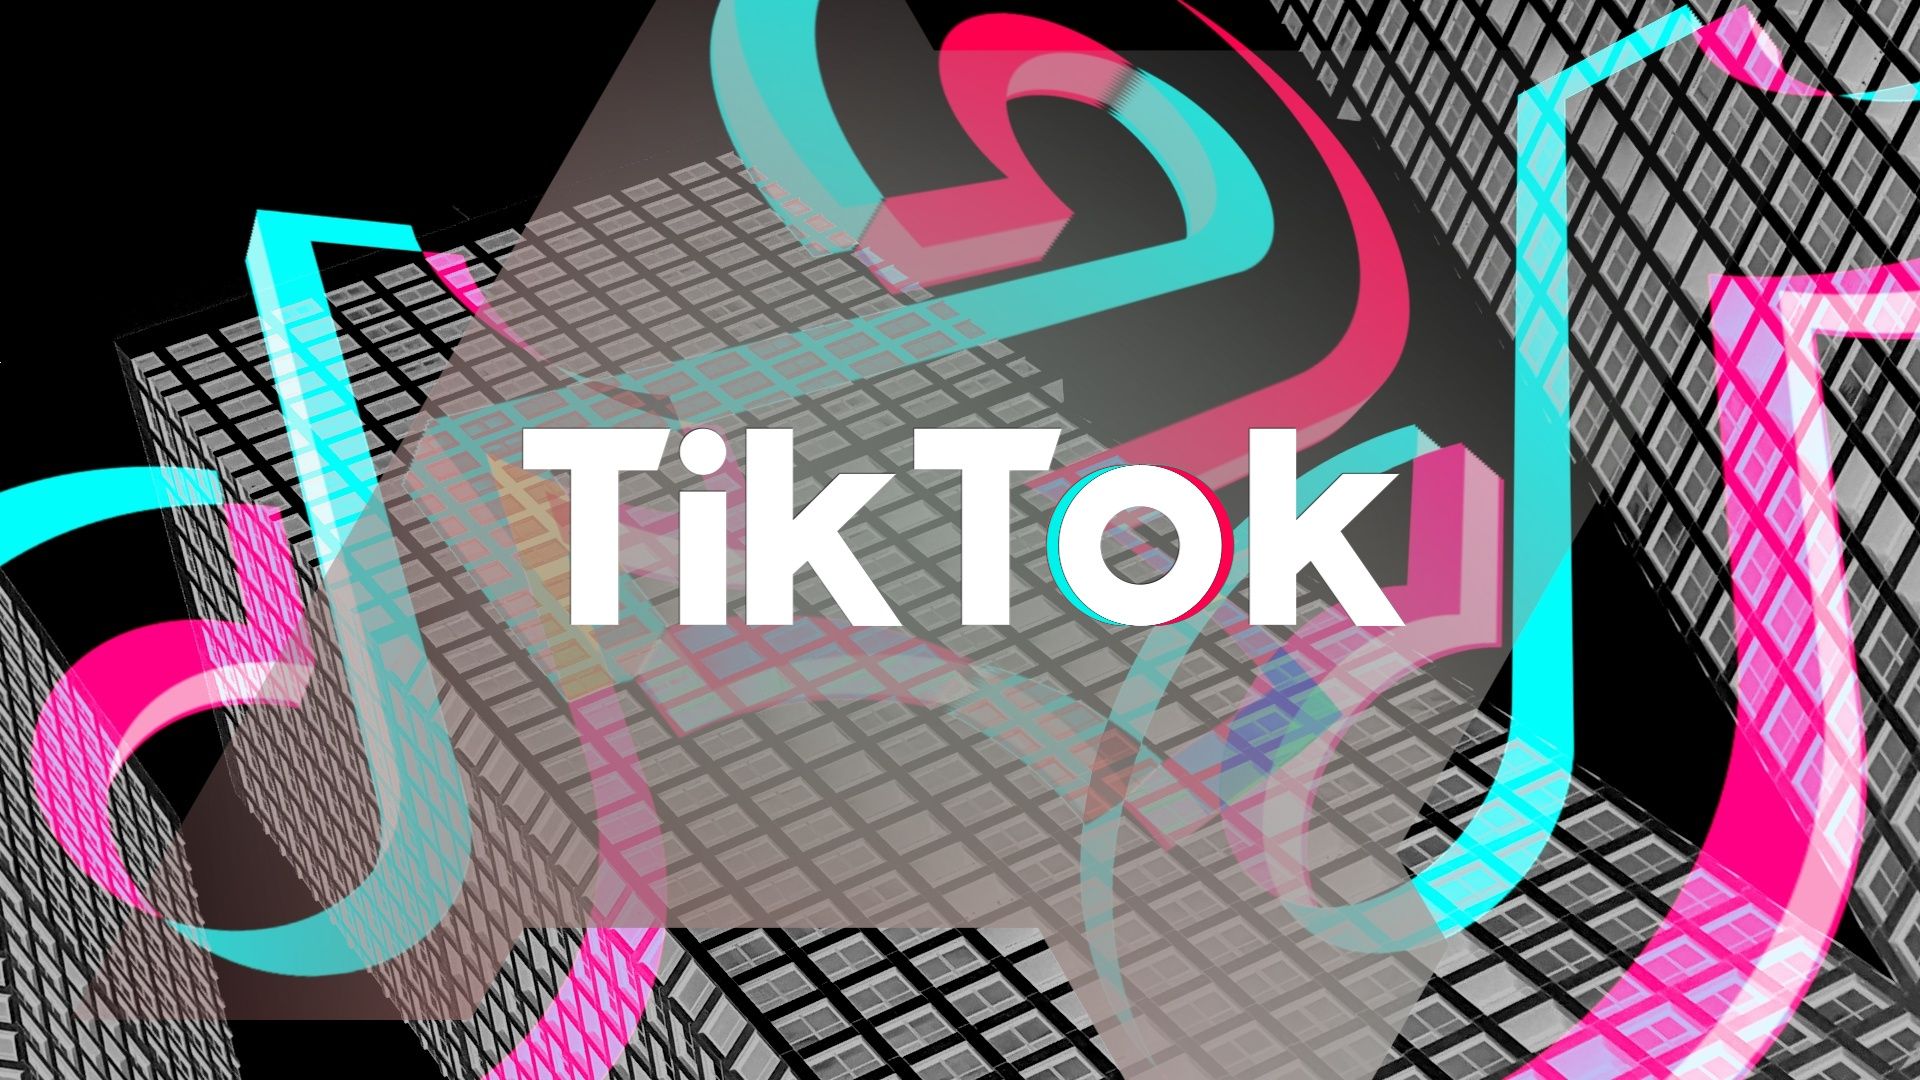 The TikTok logo against a skyscraper landscape